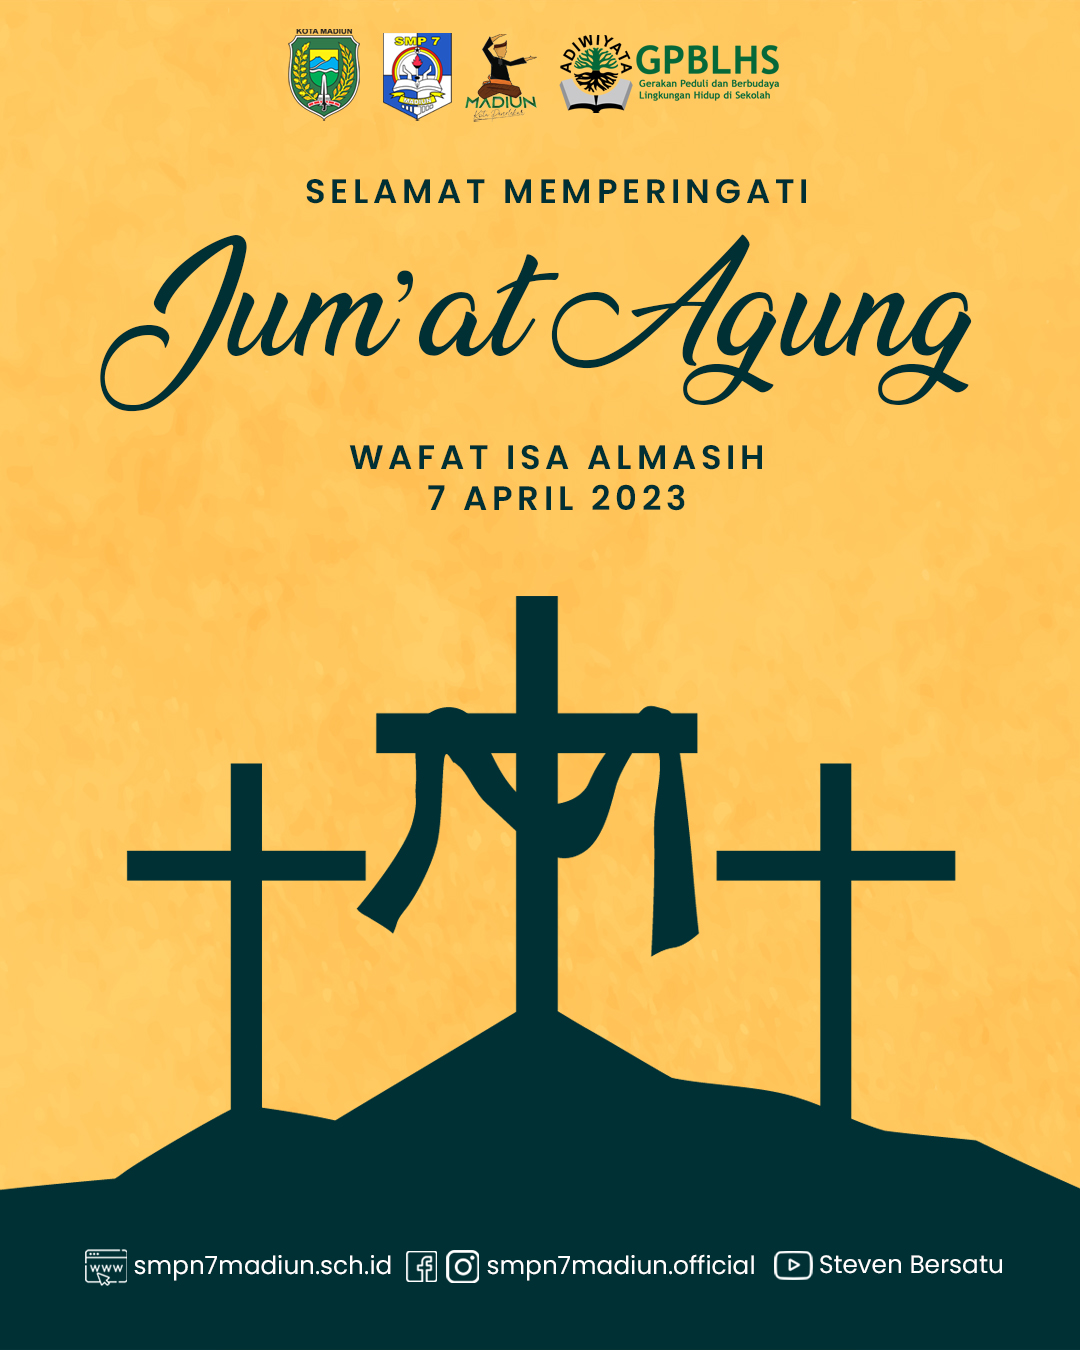 Memperingati Jum’at Agung (Wafat Isa Al Masih) 2023